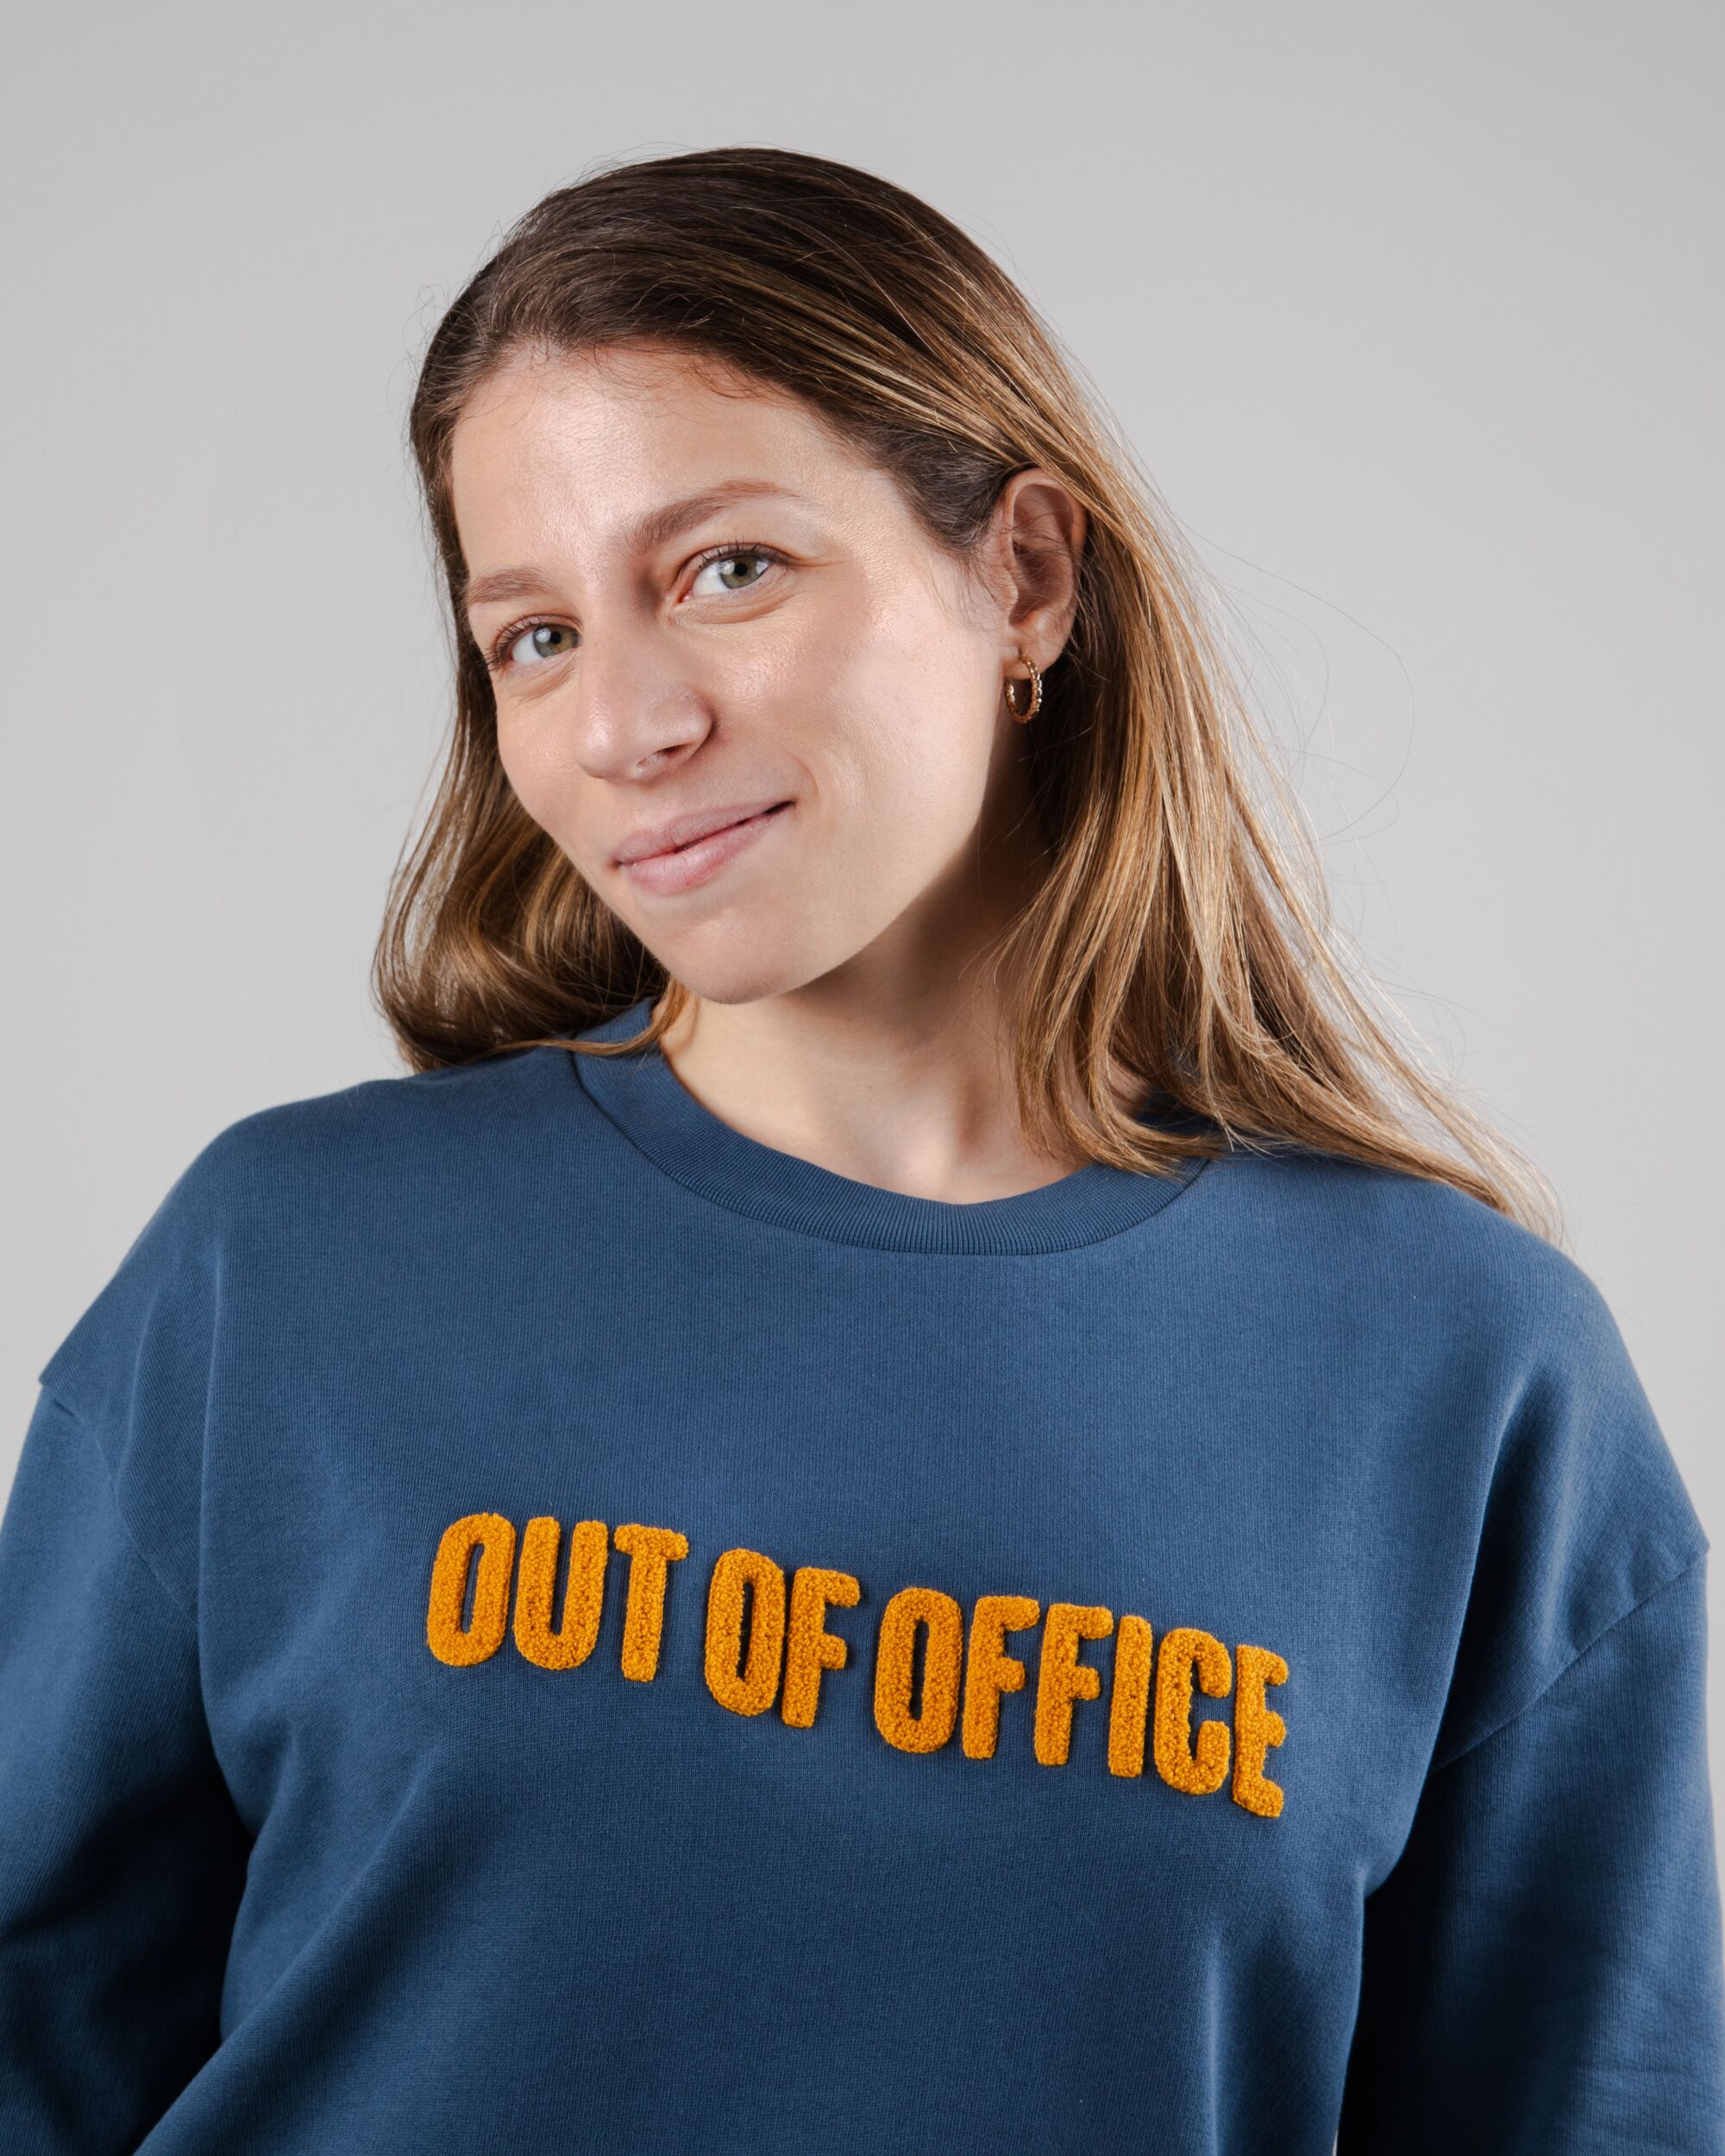 Out of Office Sweatshirt Indigo